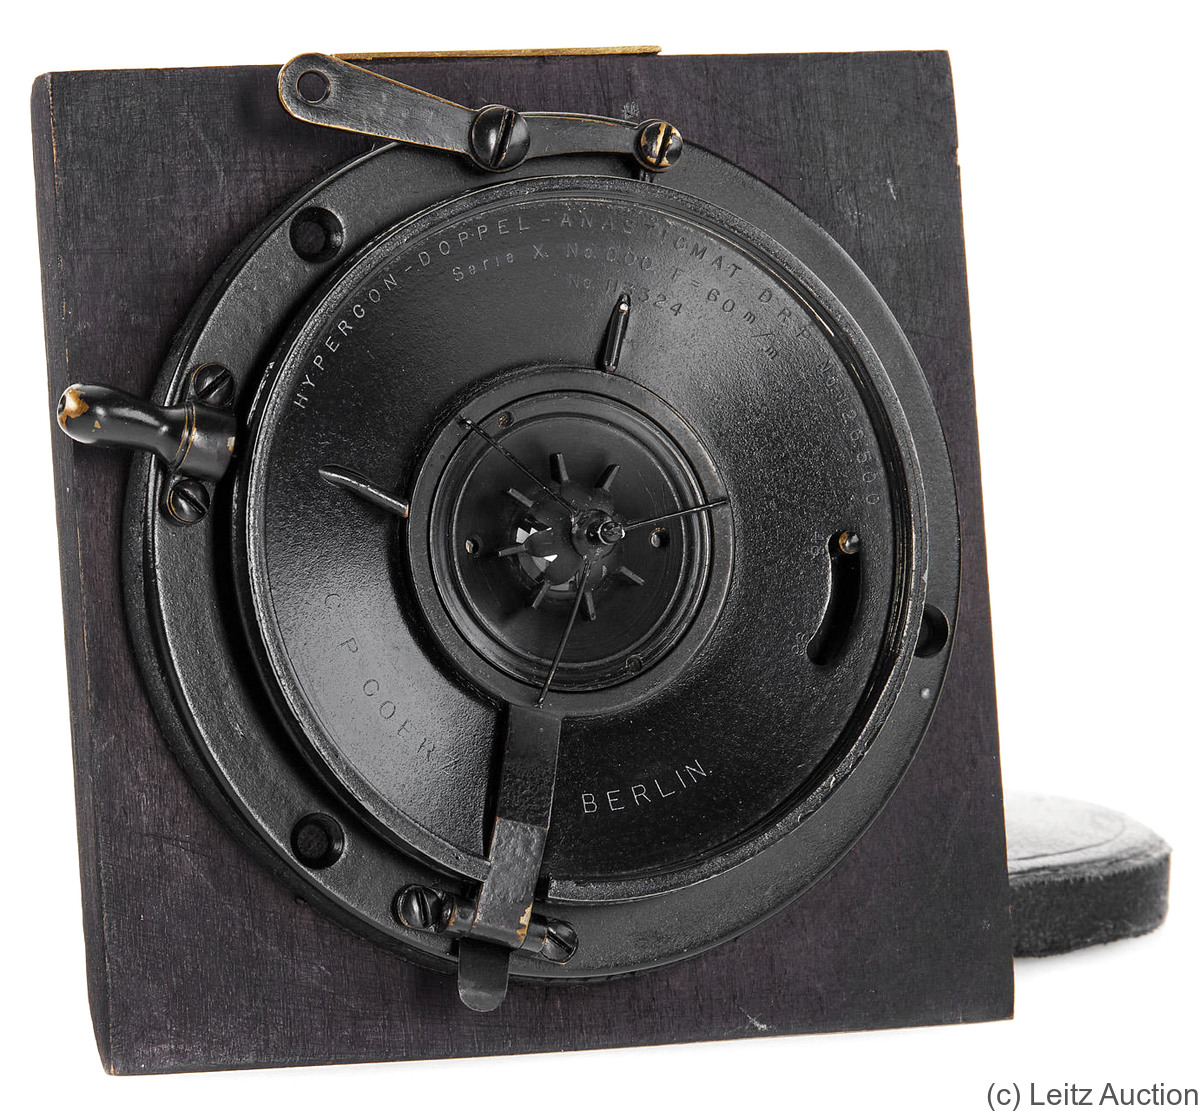 Goerz C.P.: 60mm (6cm) Hypergon camera